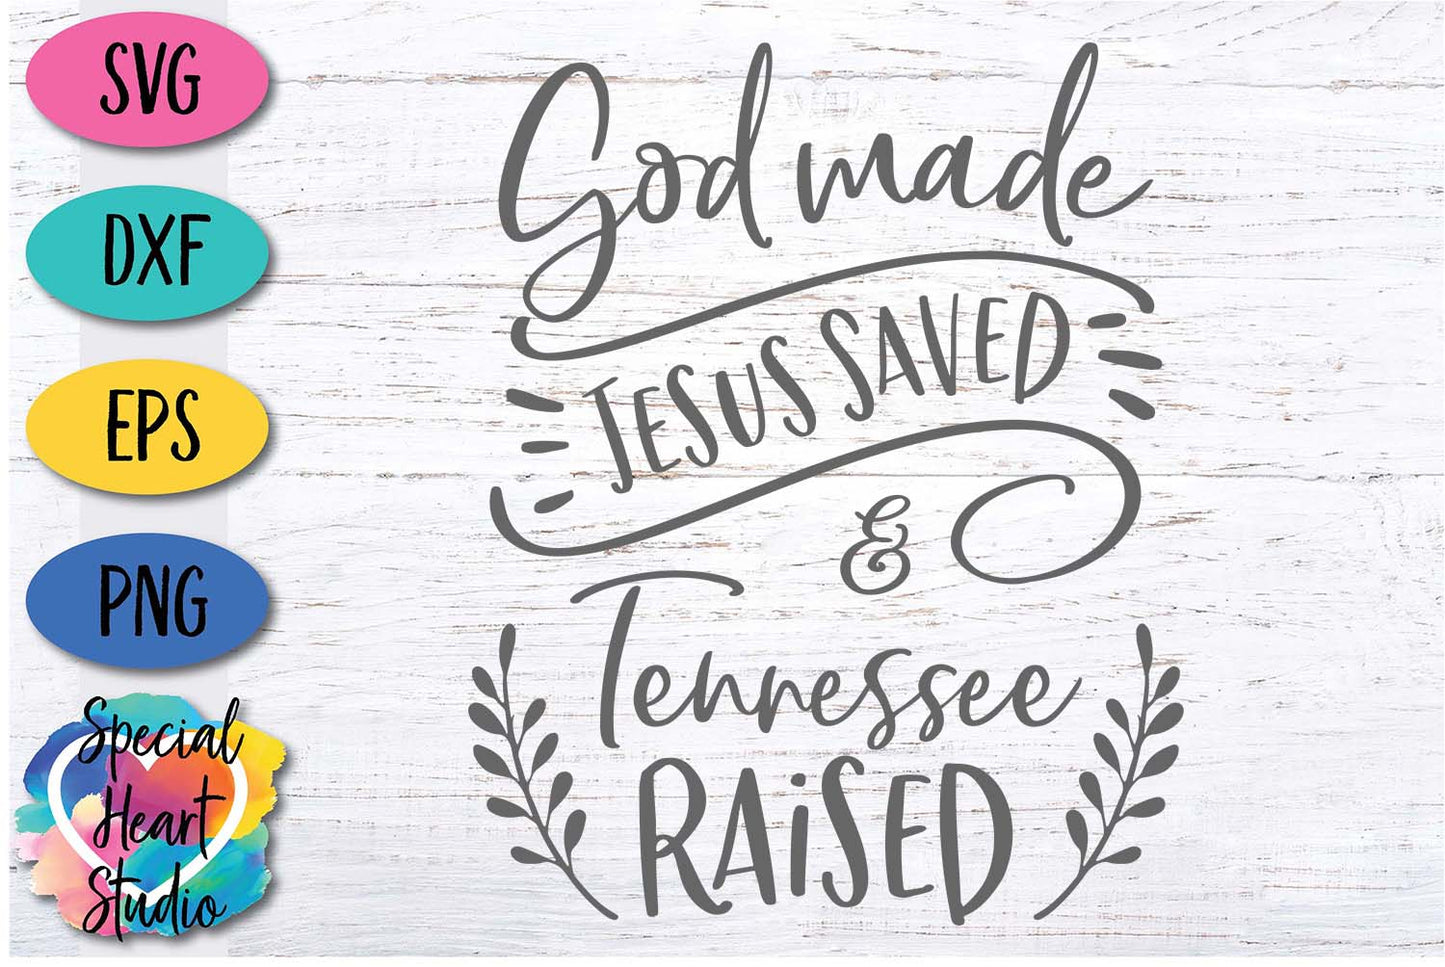 God Made, Jesus Saved and Tennessee Raised